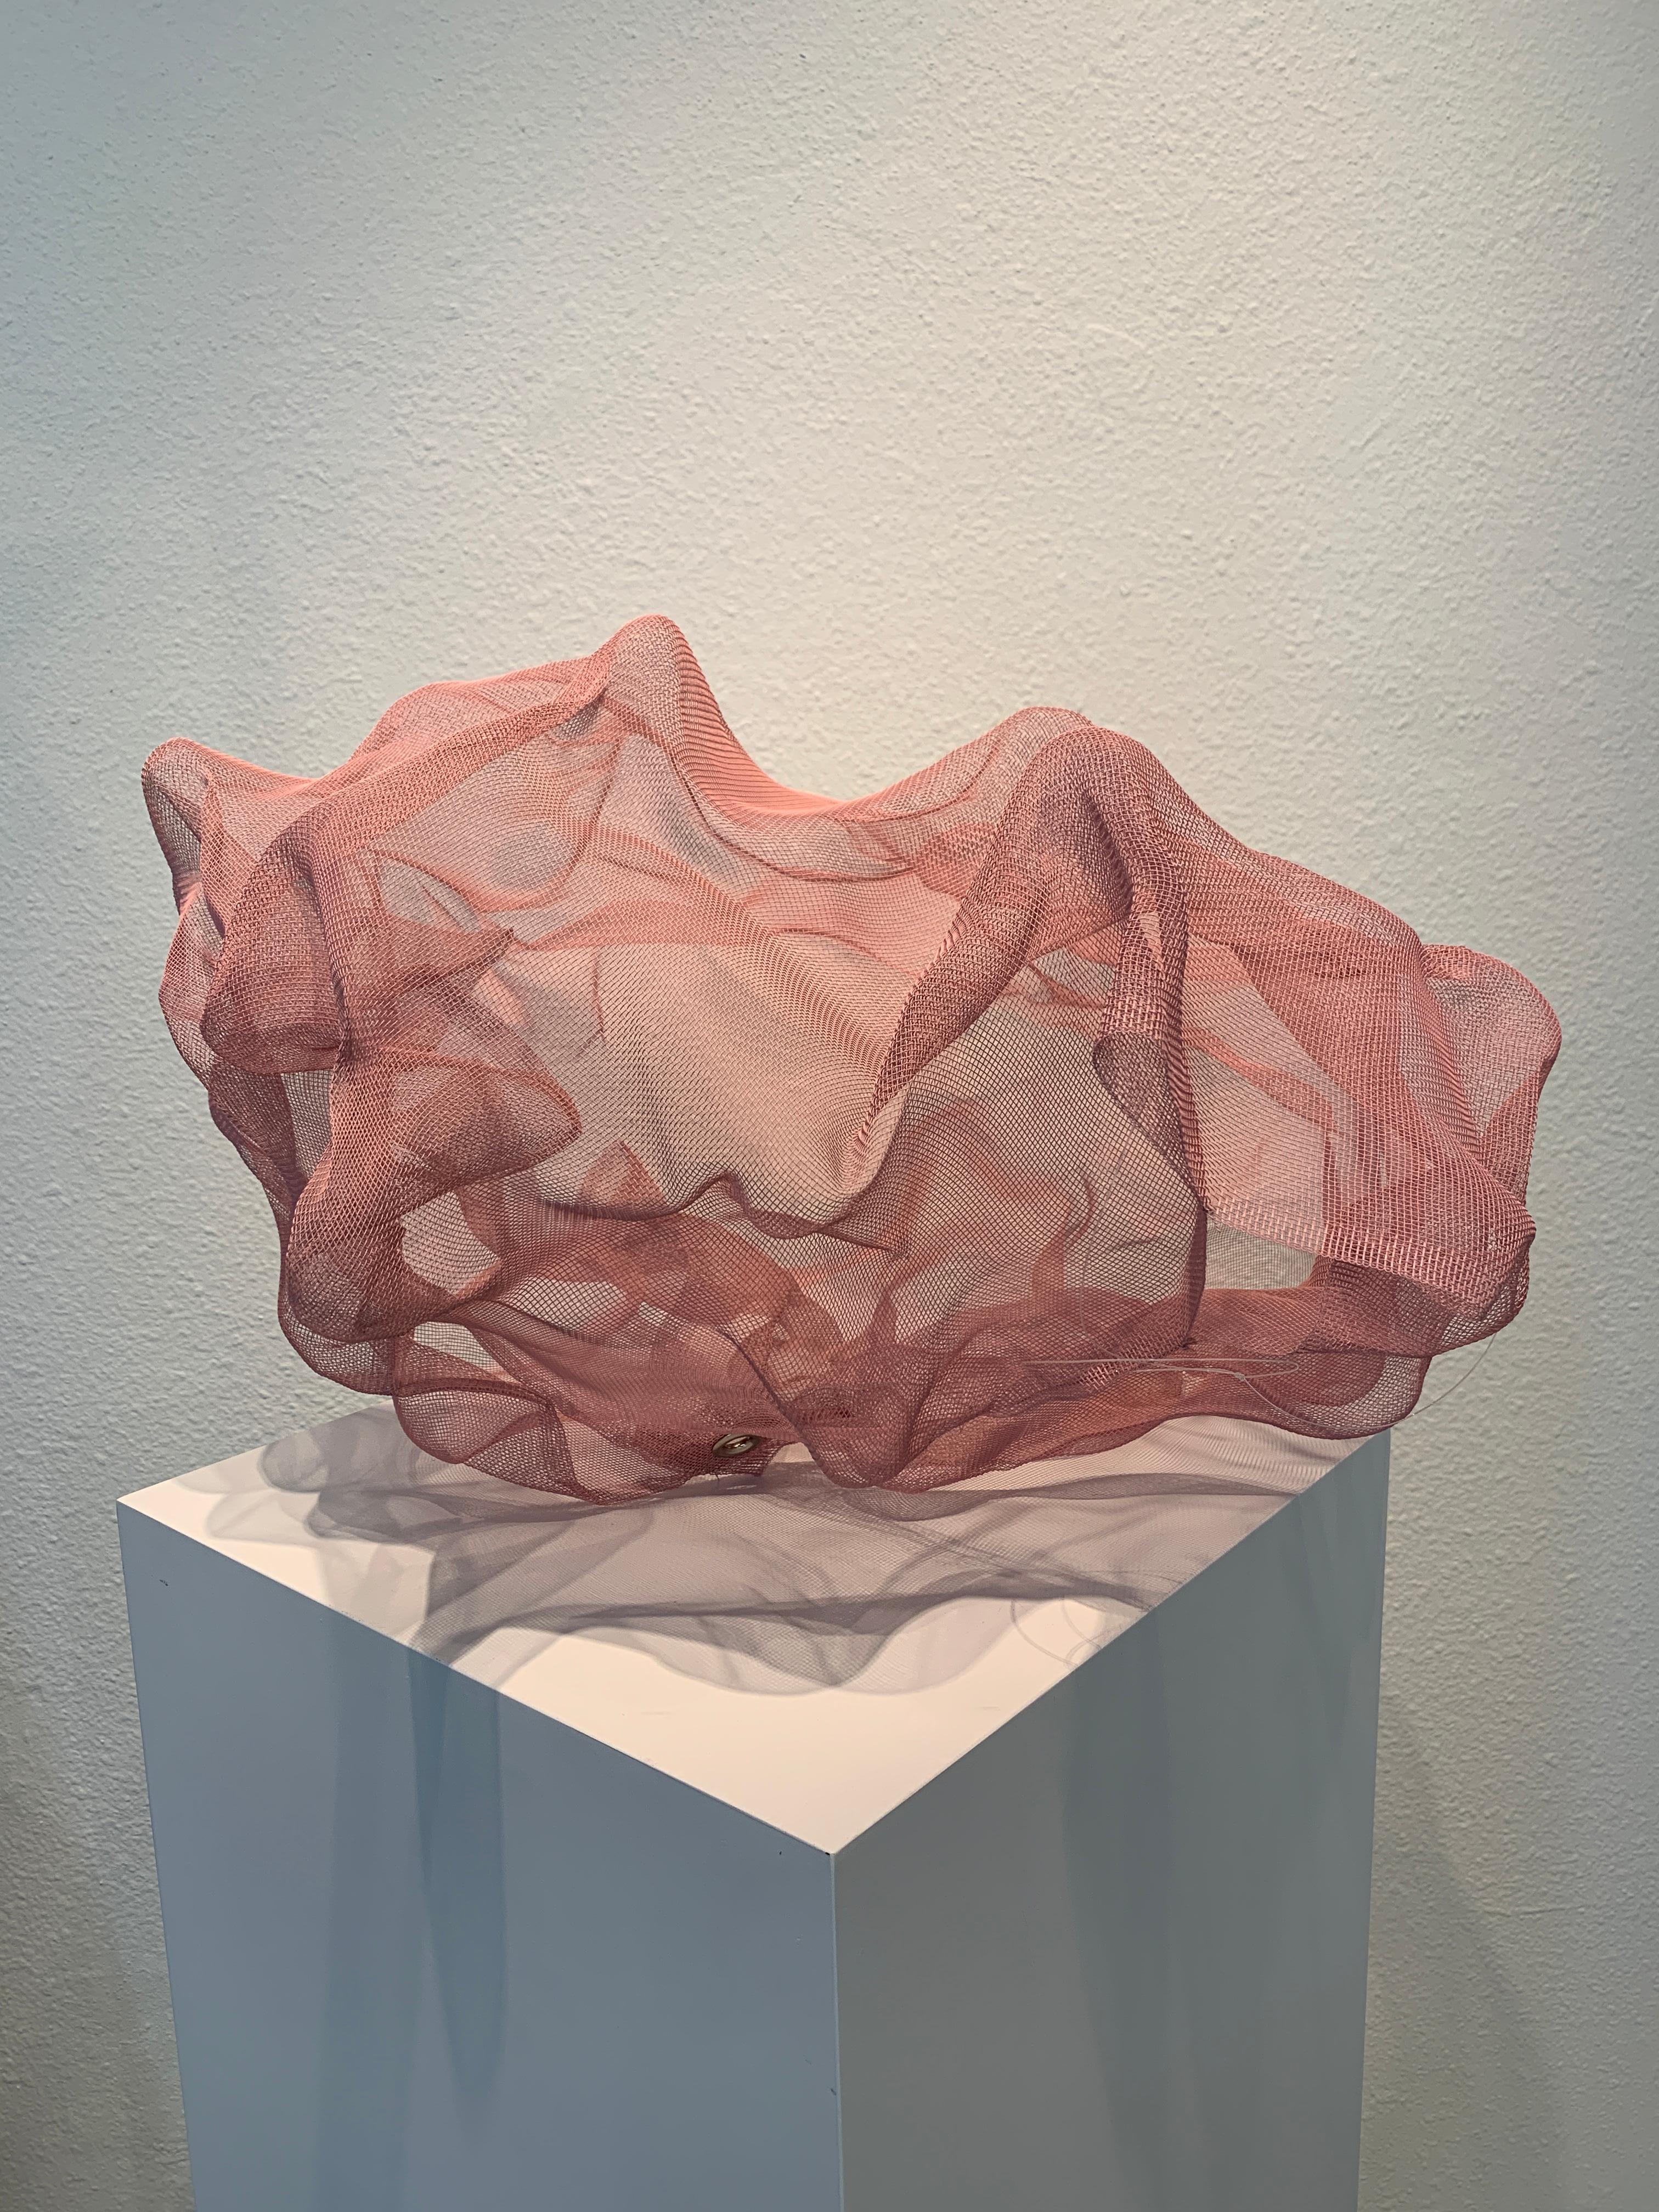 Cotton Candy Cumulus, Atticus Adams Pink Metal Mesh Sculpture Screen 4